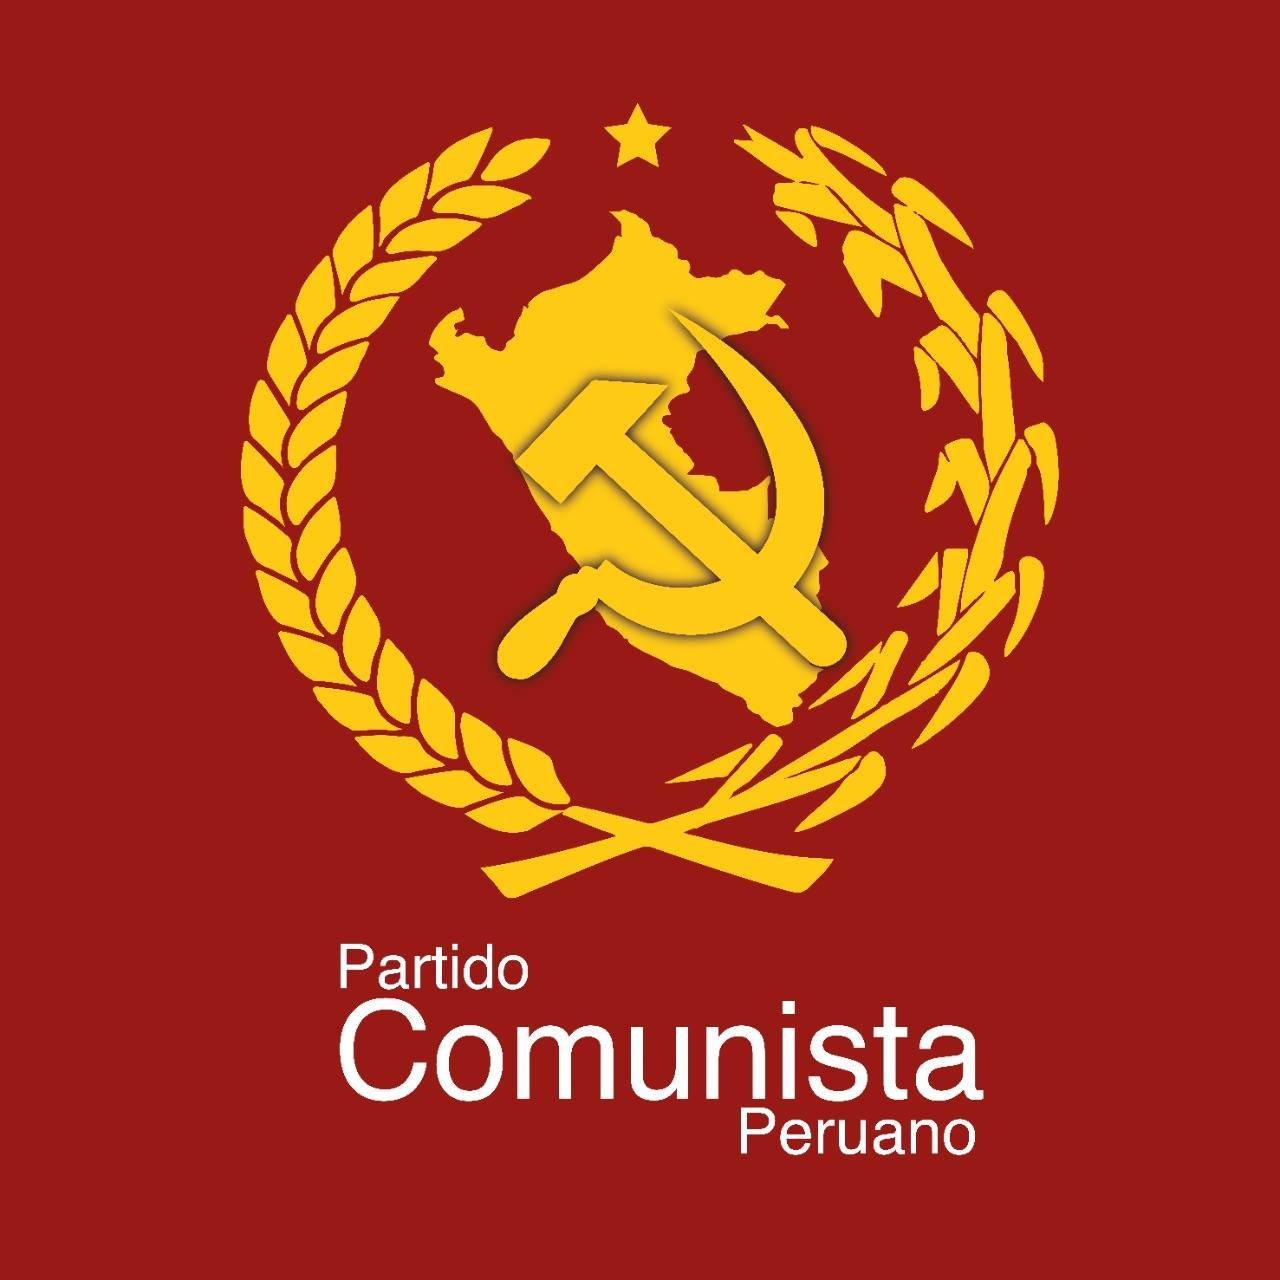 Statement From the CP-Peru: Reject Repression